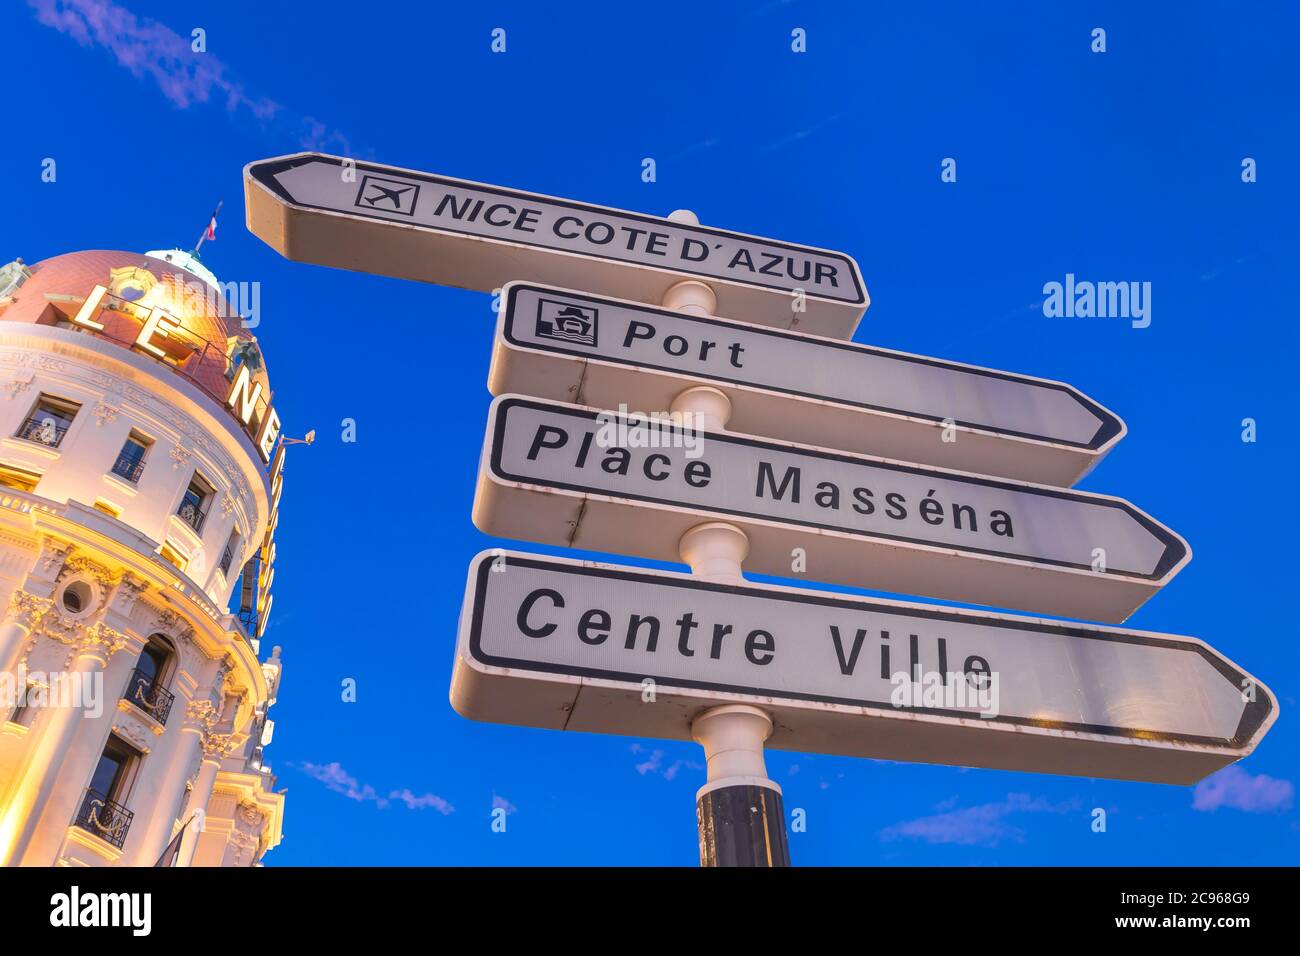 Street signs near the famous Le Negresco building, Nice, Cote d'Azur, France, Europe Stock Photo